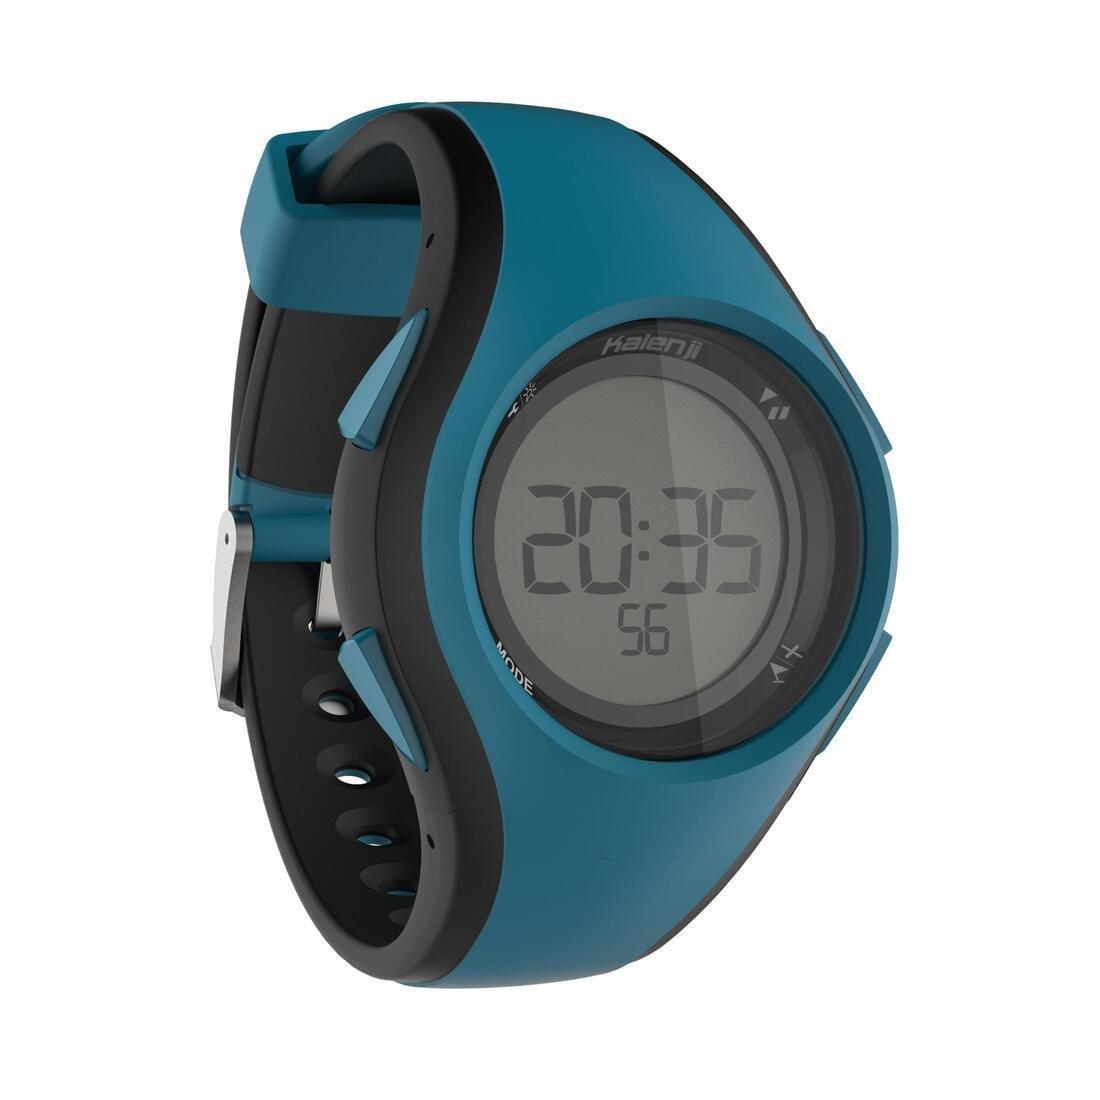 KALENJI - OnTraining 200 Timer Watch, Blue Azure